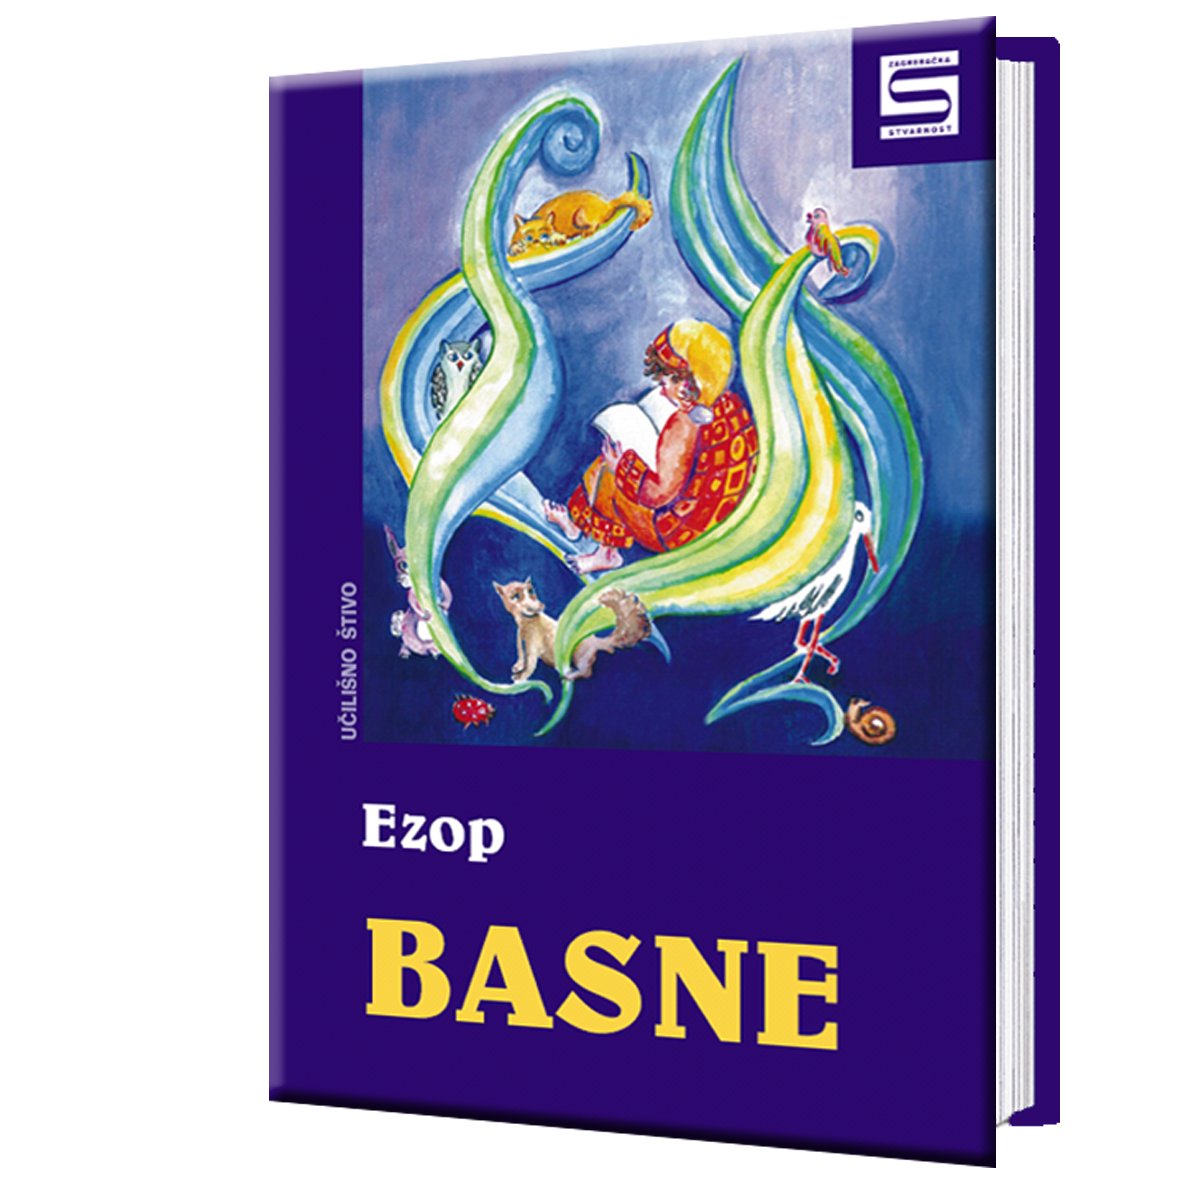 Basne - Ezop